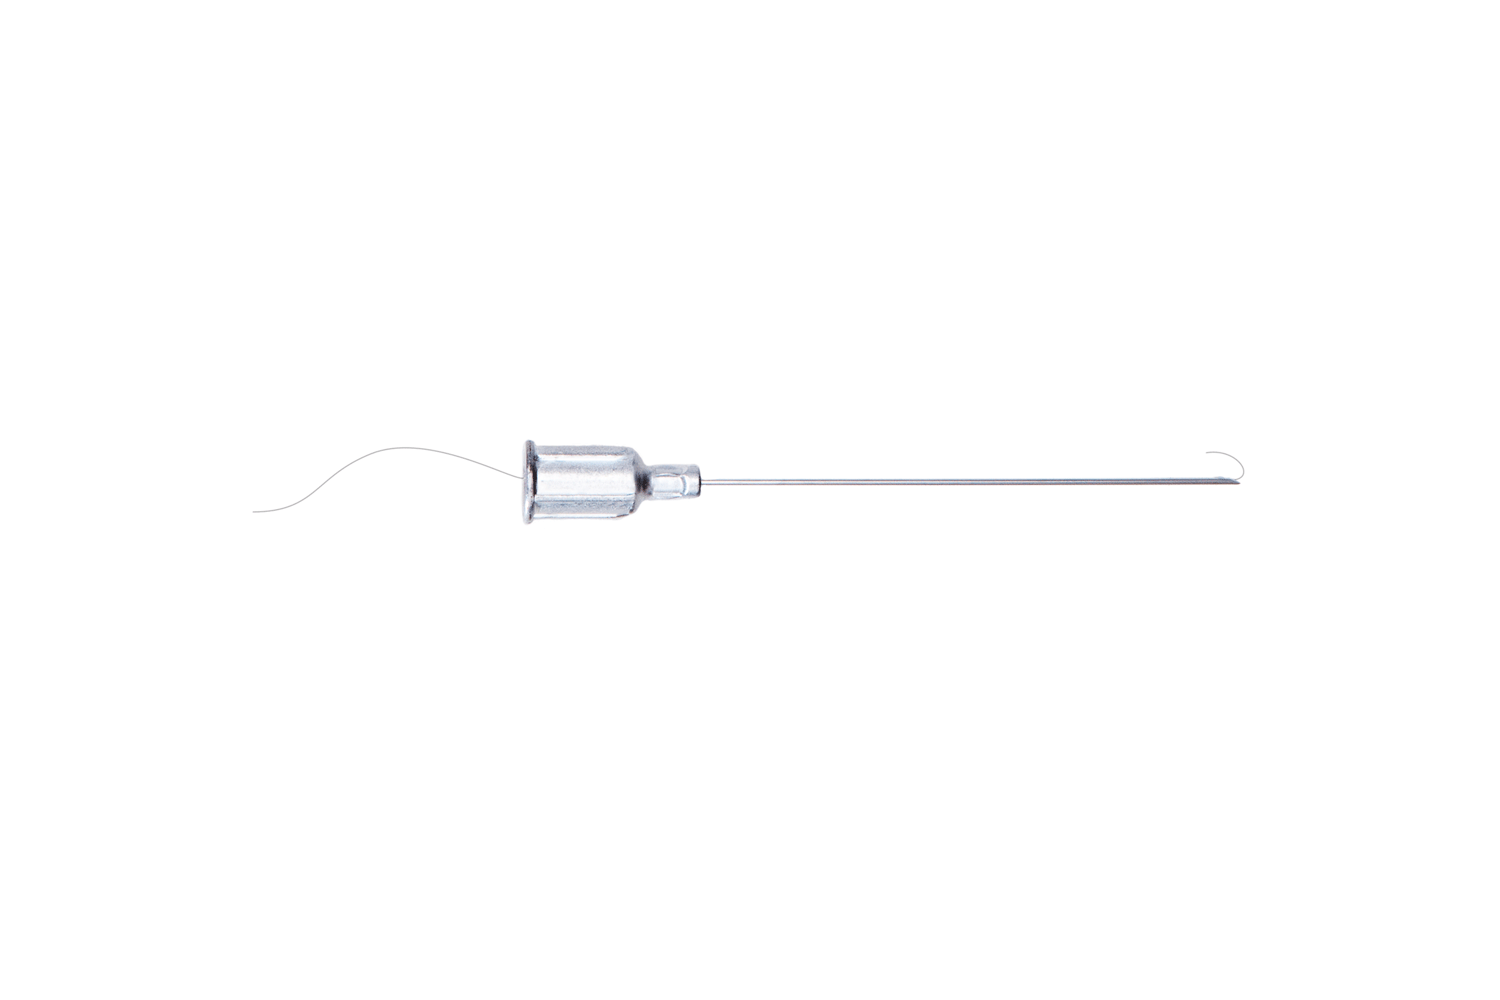 Monopolar hook wire electrode: 50 mm needle length, 0.50 mm needle diameter, code DIMW1105050101RU